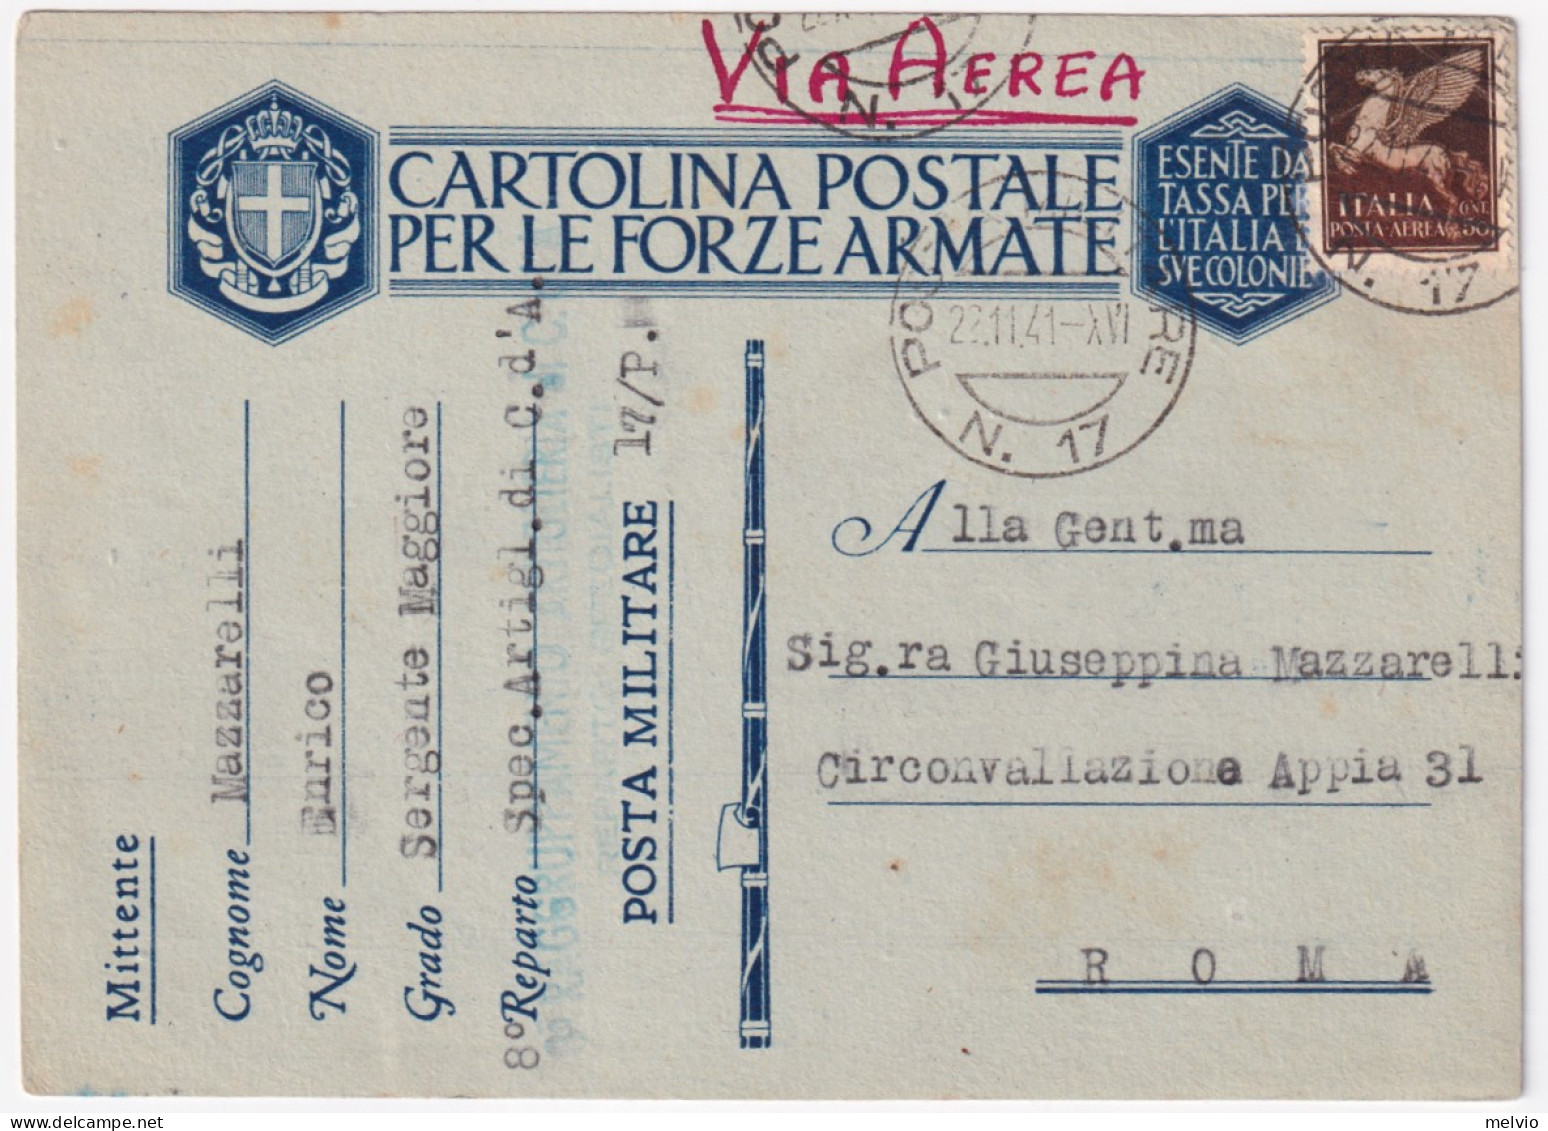 1941-Posta Militare/n. 17 C.2 (22.11) Su Cartolina Franchigia Via Aerea - Marcophilie